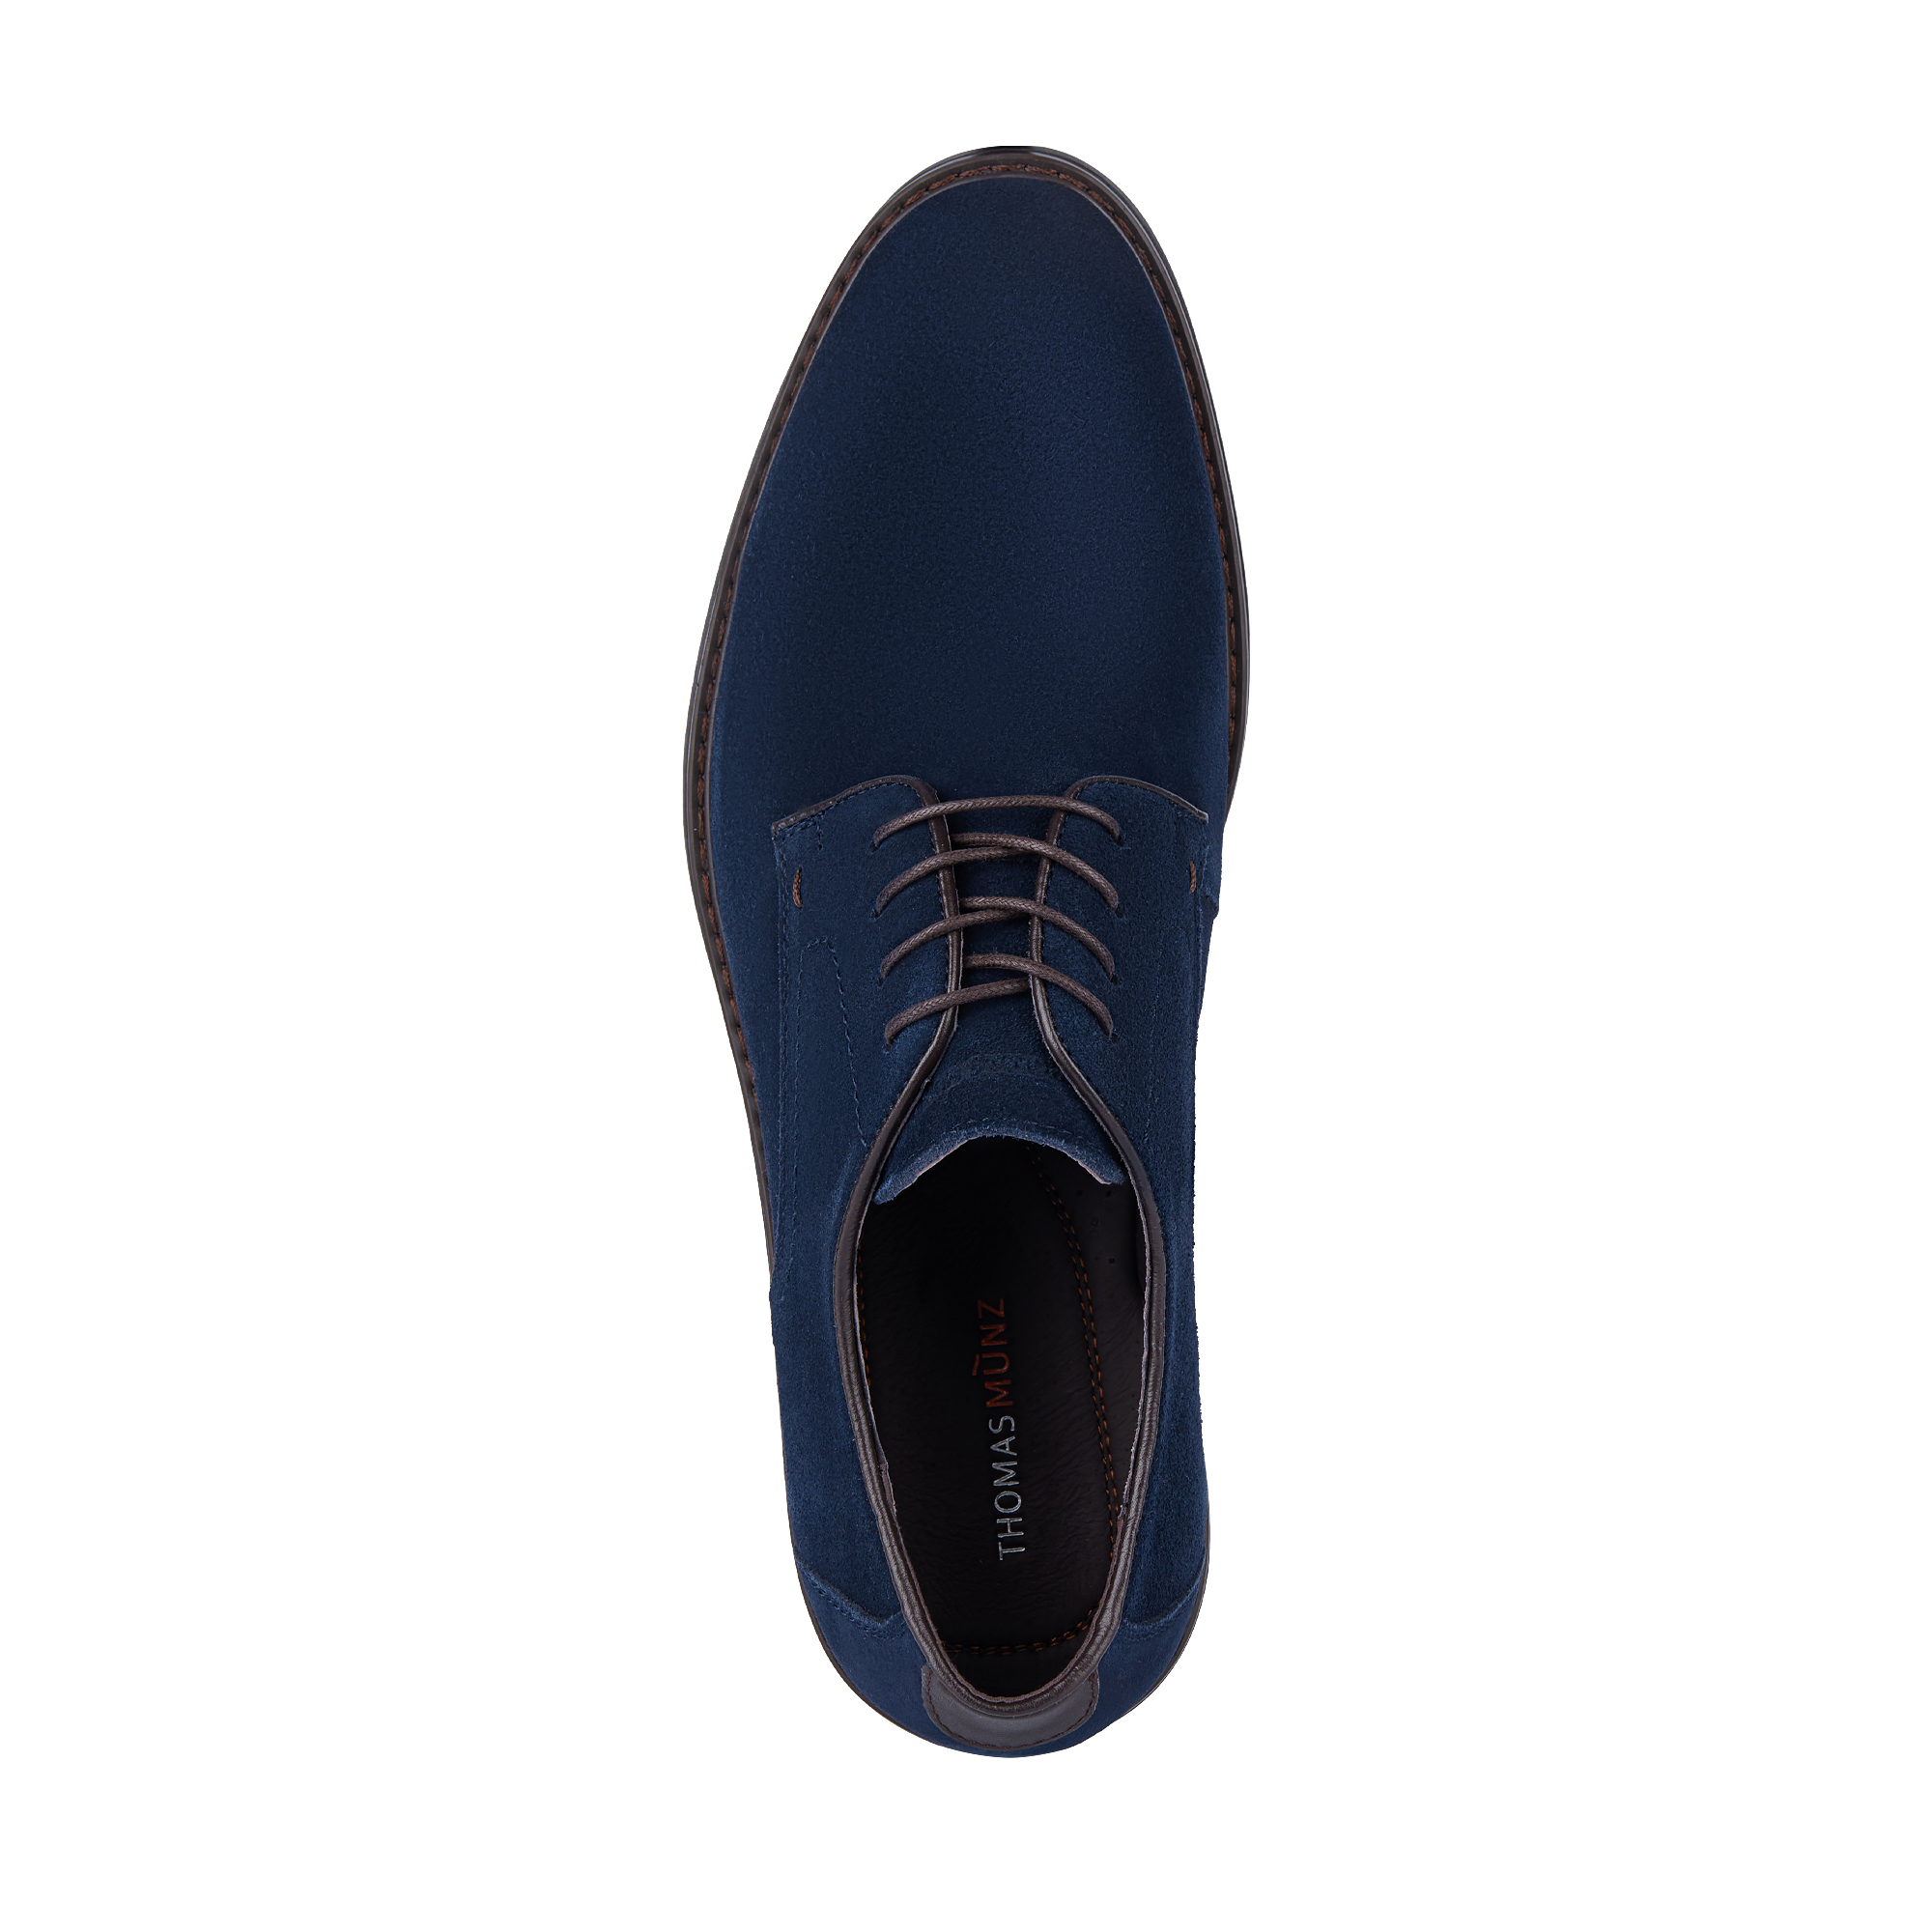 Туфли/полуботинки Thomas Munz 104-378A-2602, цвет синий, размер 41 - фото 5